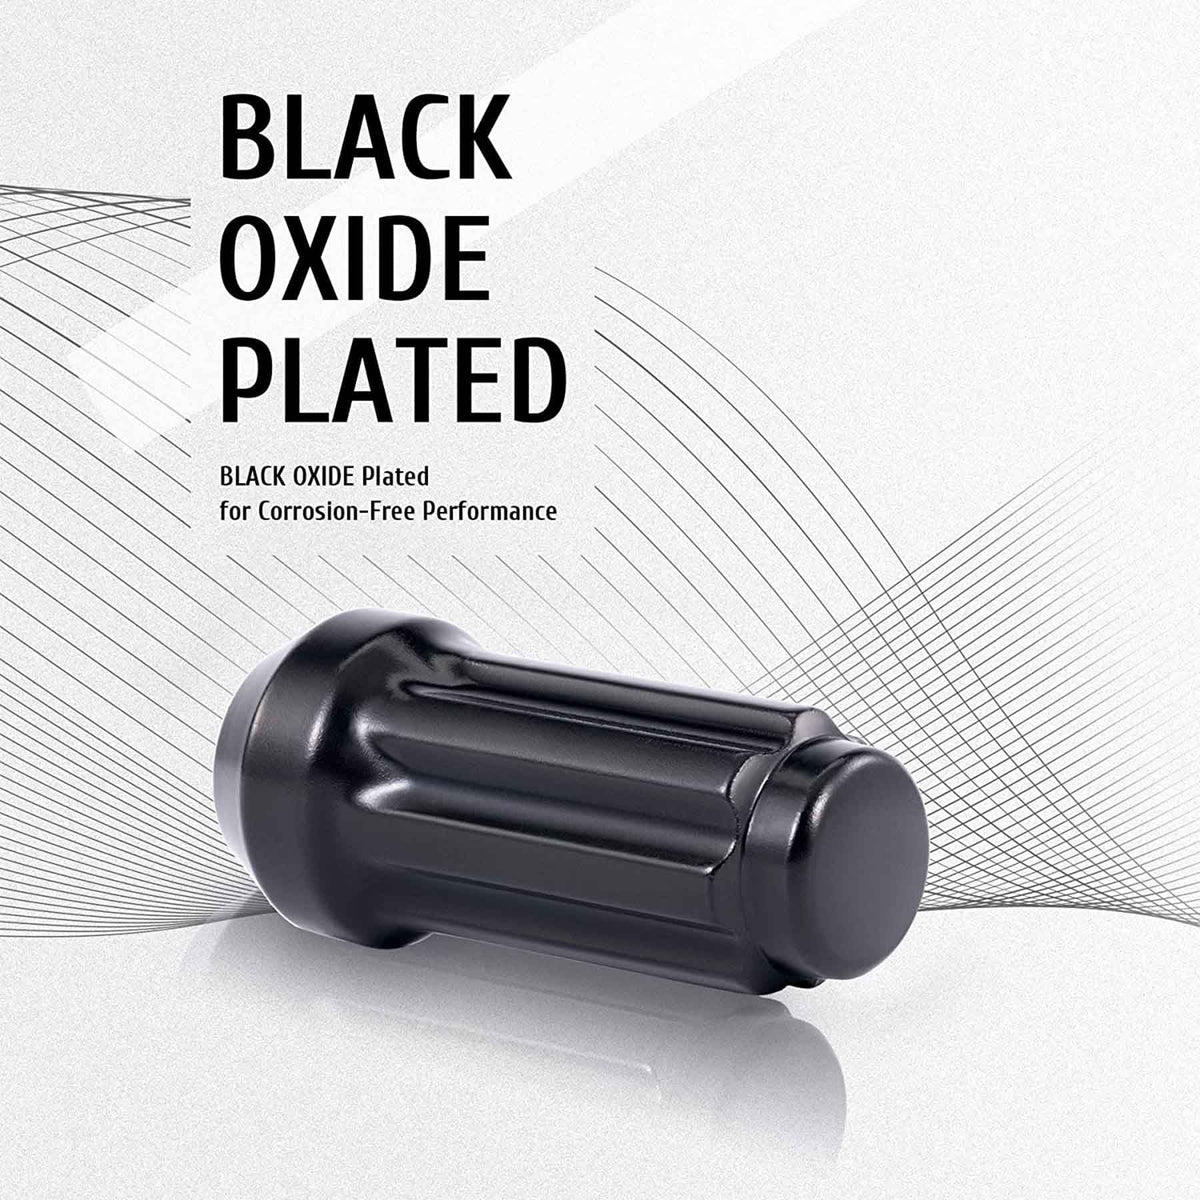 Balck Oxide Plated Wheel Lug Nuts